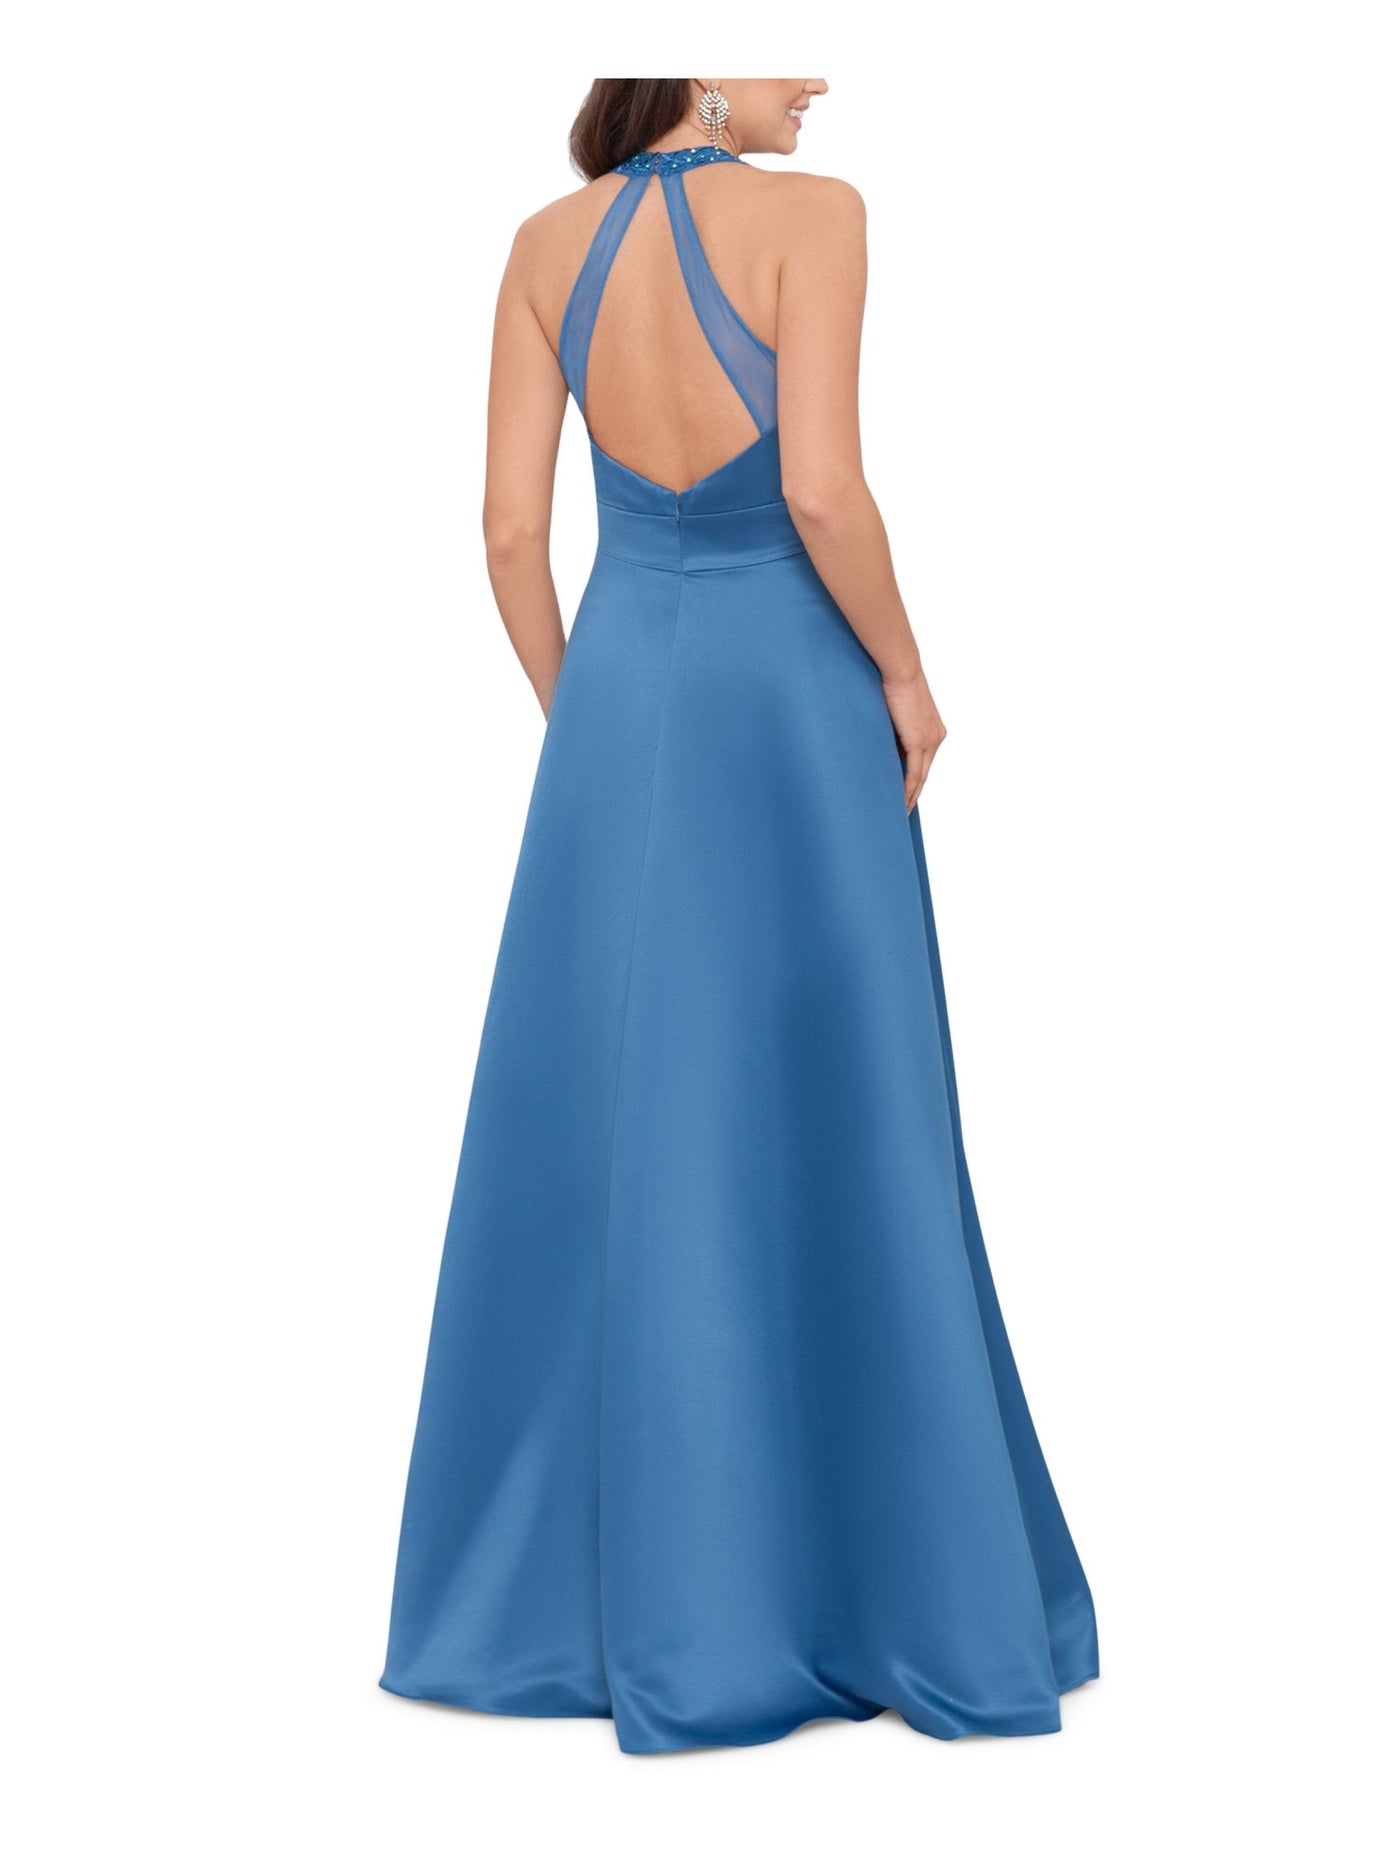 BLONDIE Womens Blue Embellished Zippered Plunging V-neck Mesh Back Straps Sleeveless Full-Length Prom Fit + Flare Dress Juniors 5